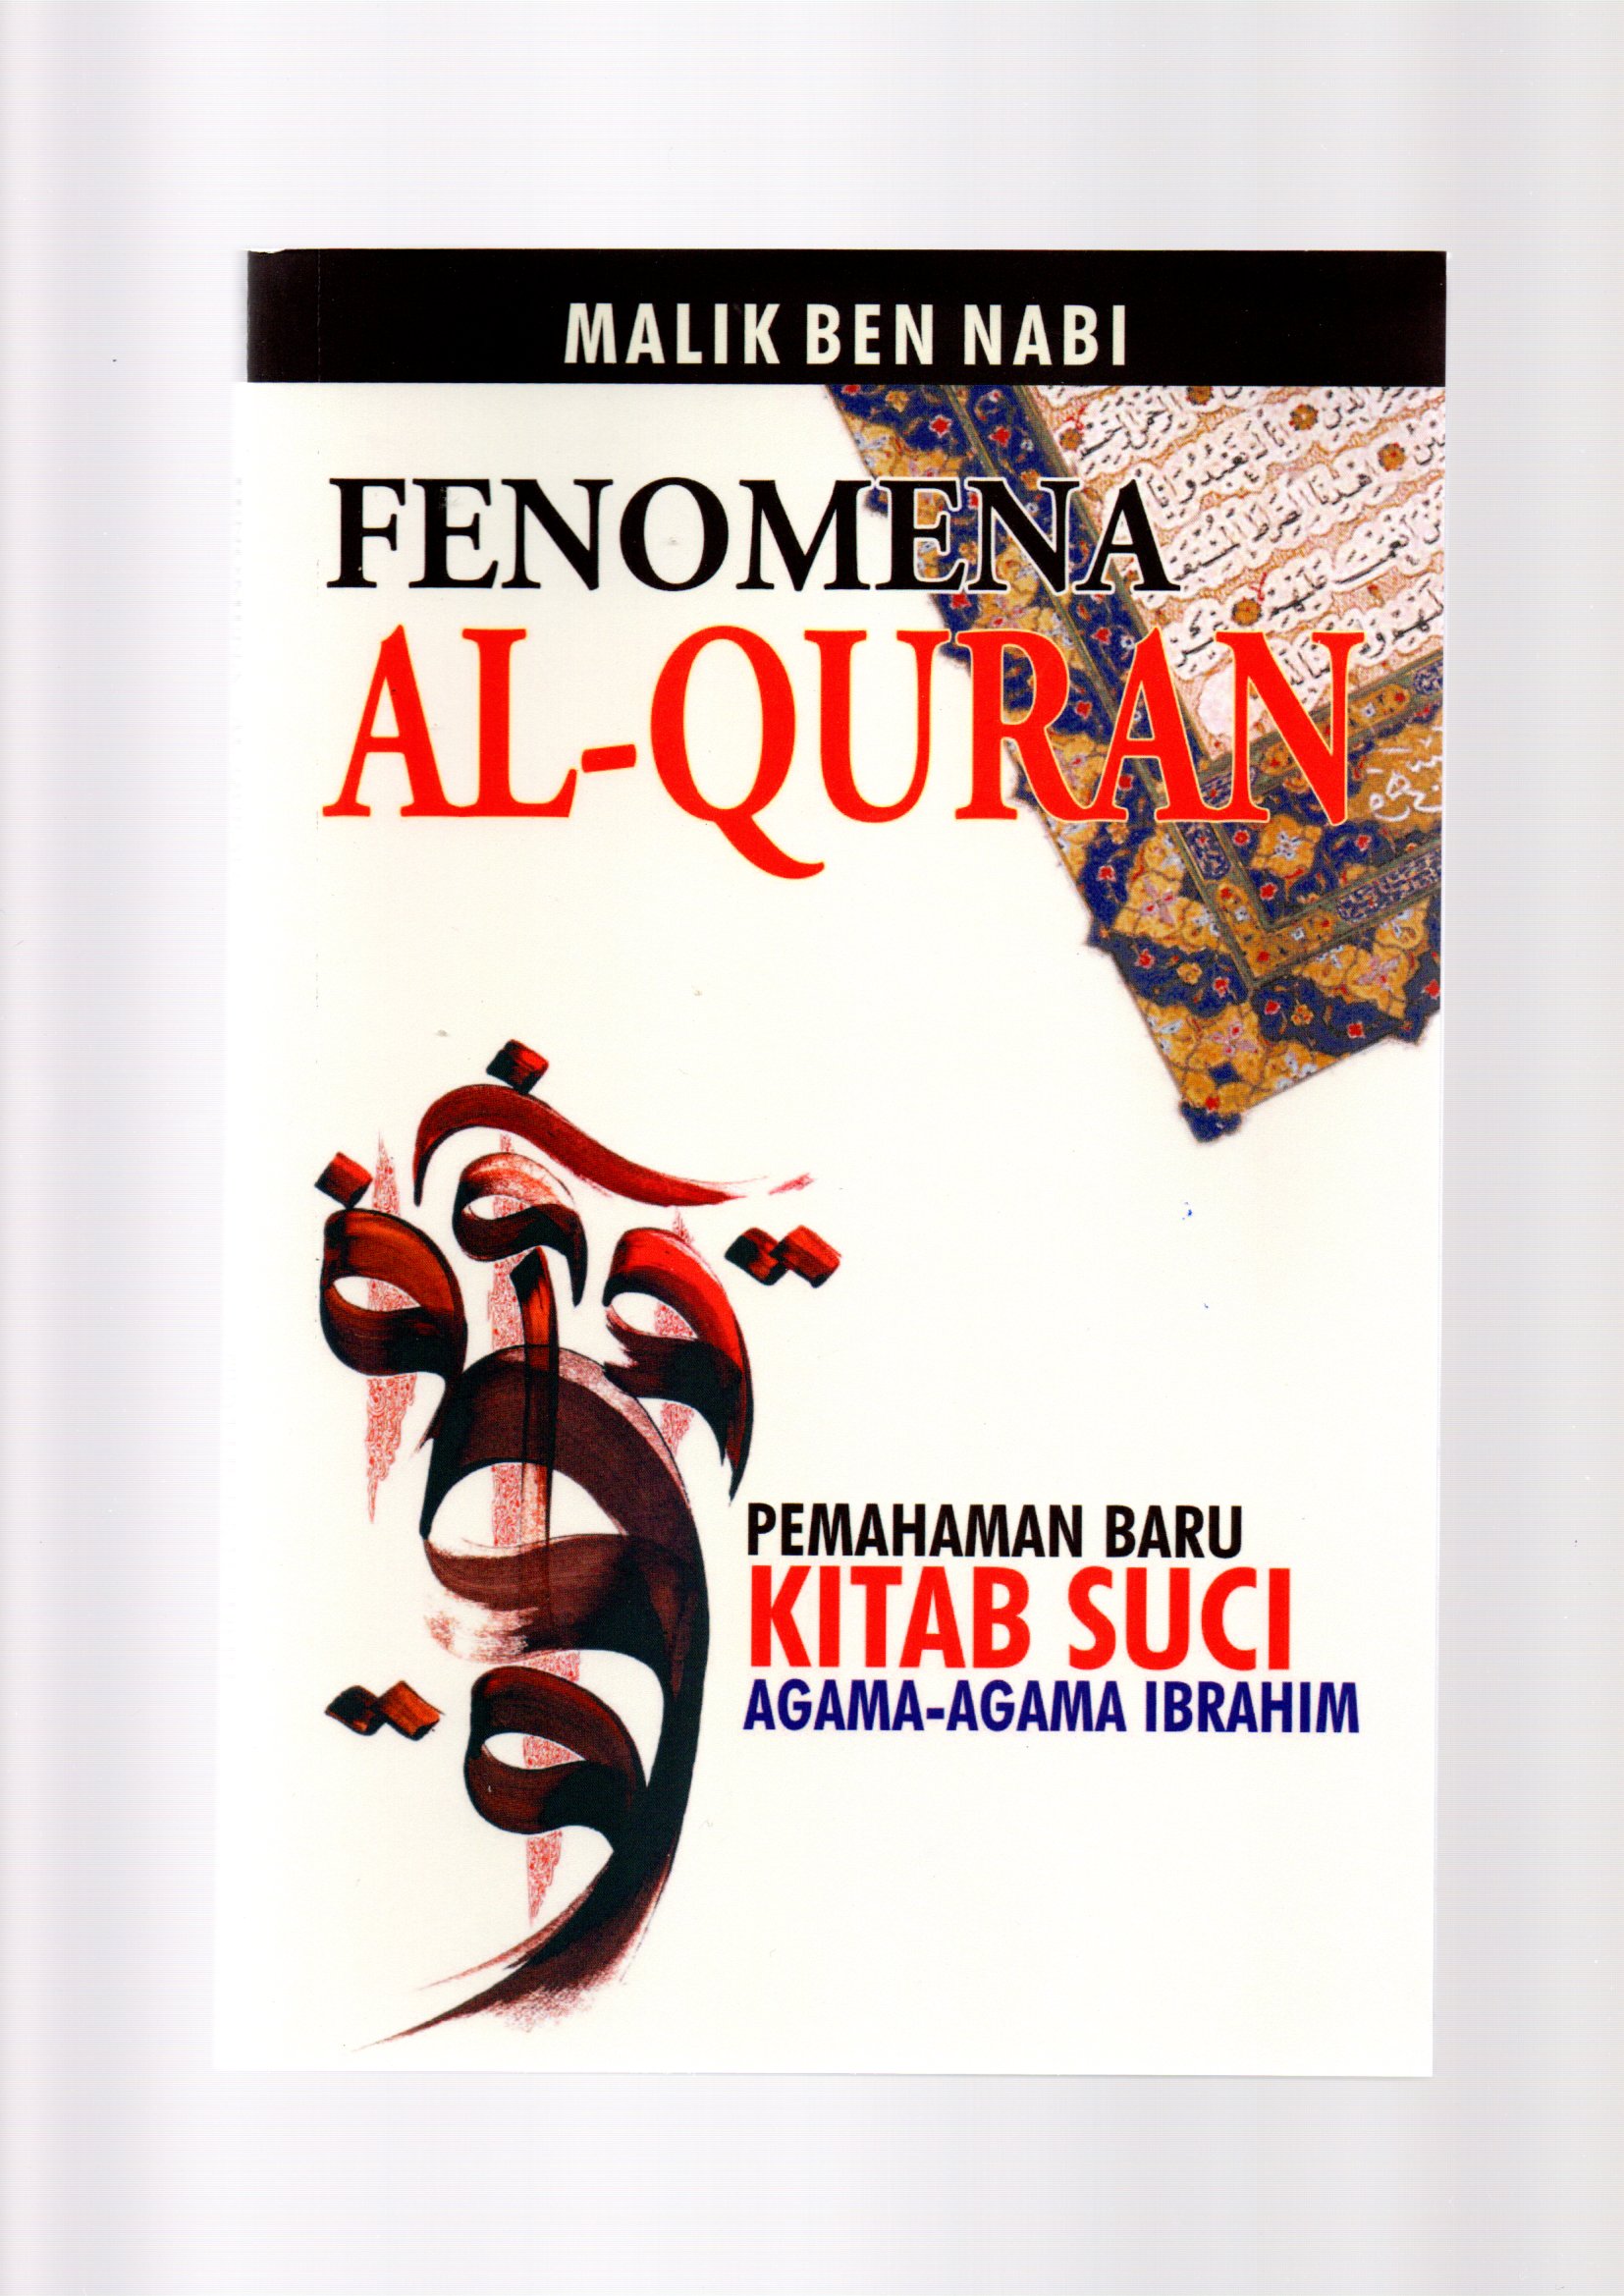 Fenomena al-quran :  pemahaman baru kitab suci agama-agama ibrahim